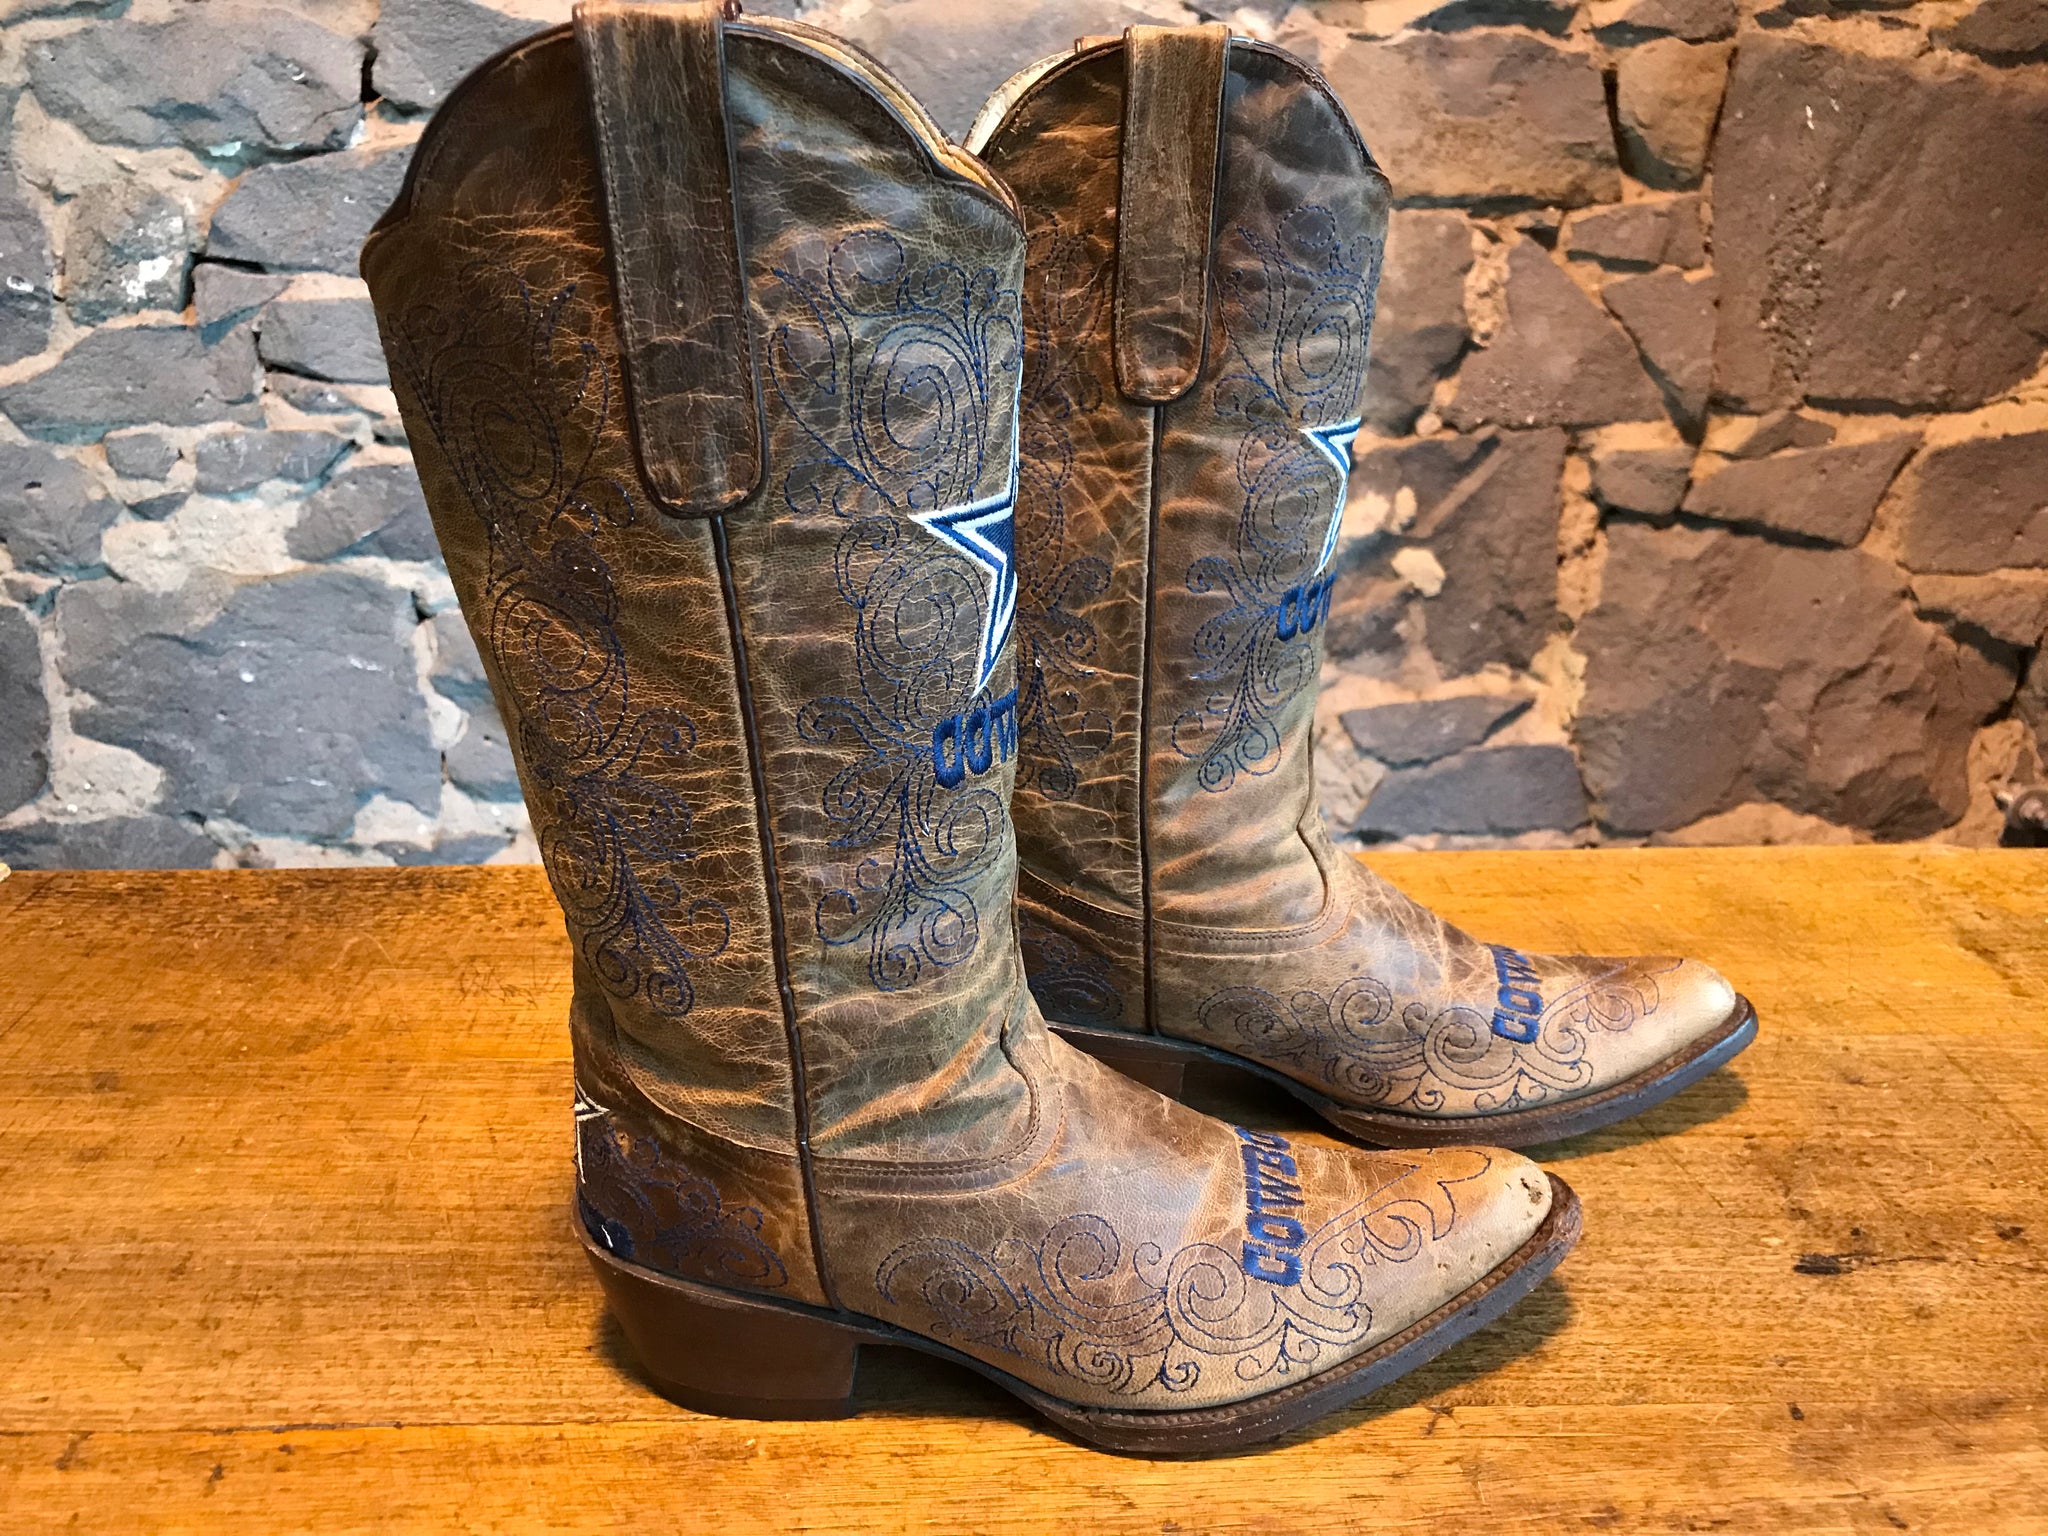 DALLAS - BROWN High Cowboy Boots